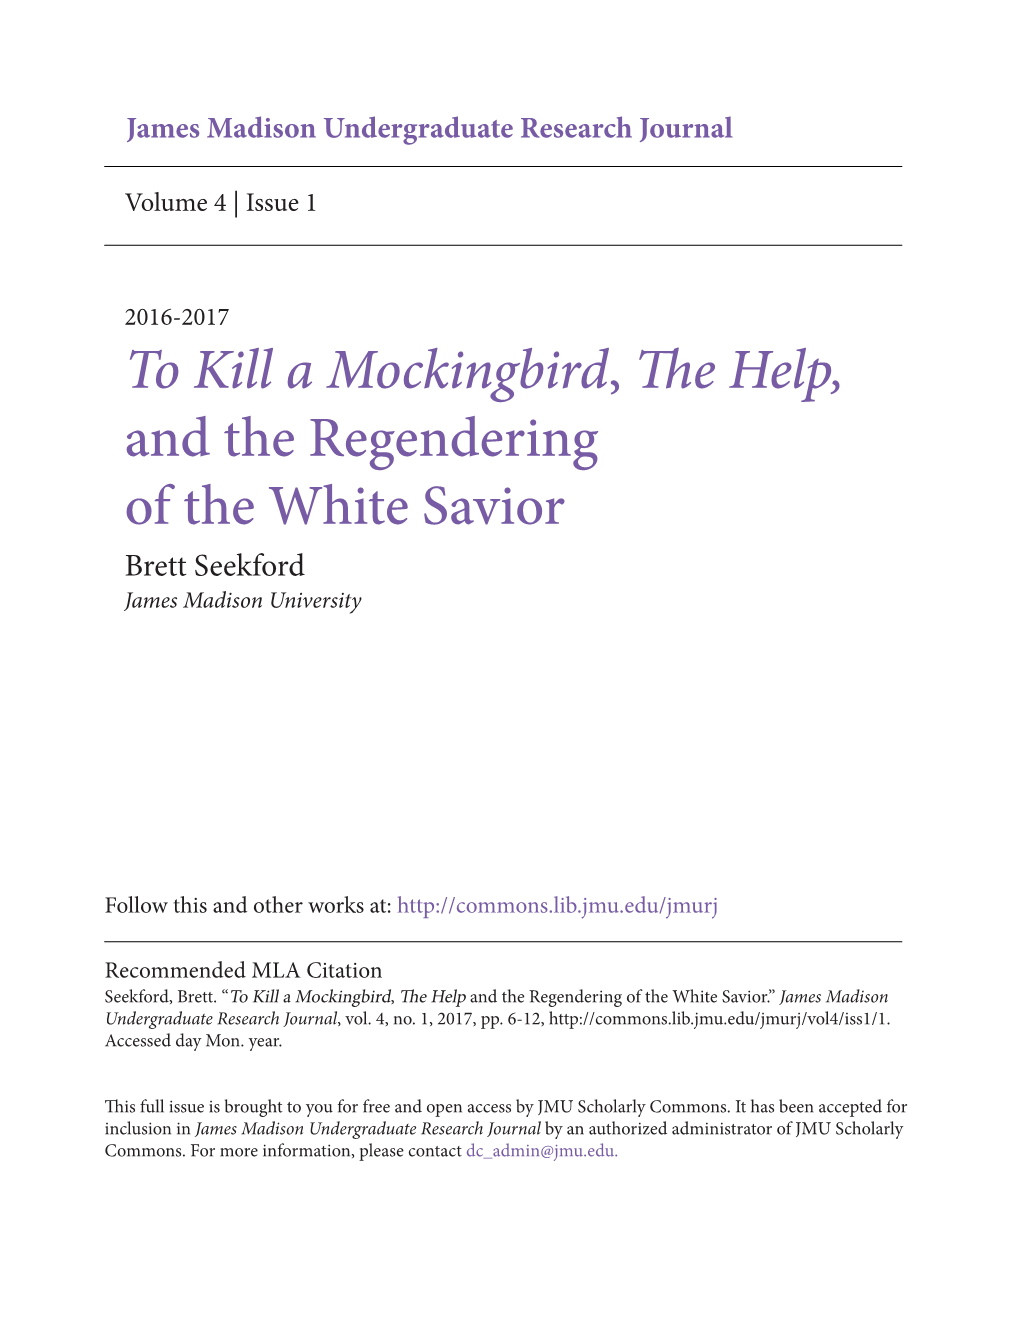 To Kill a Mockingbird, the Help, and the Regendering of the White Savior Brett Seekford James Madison University